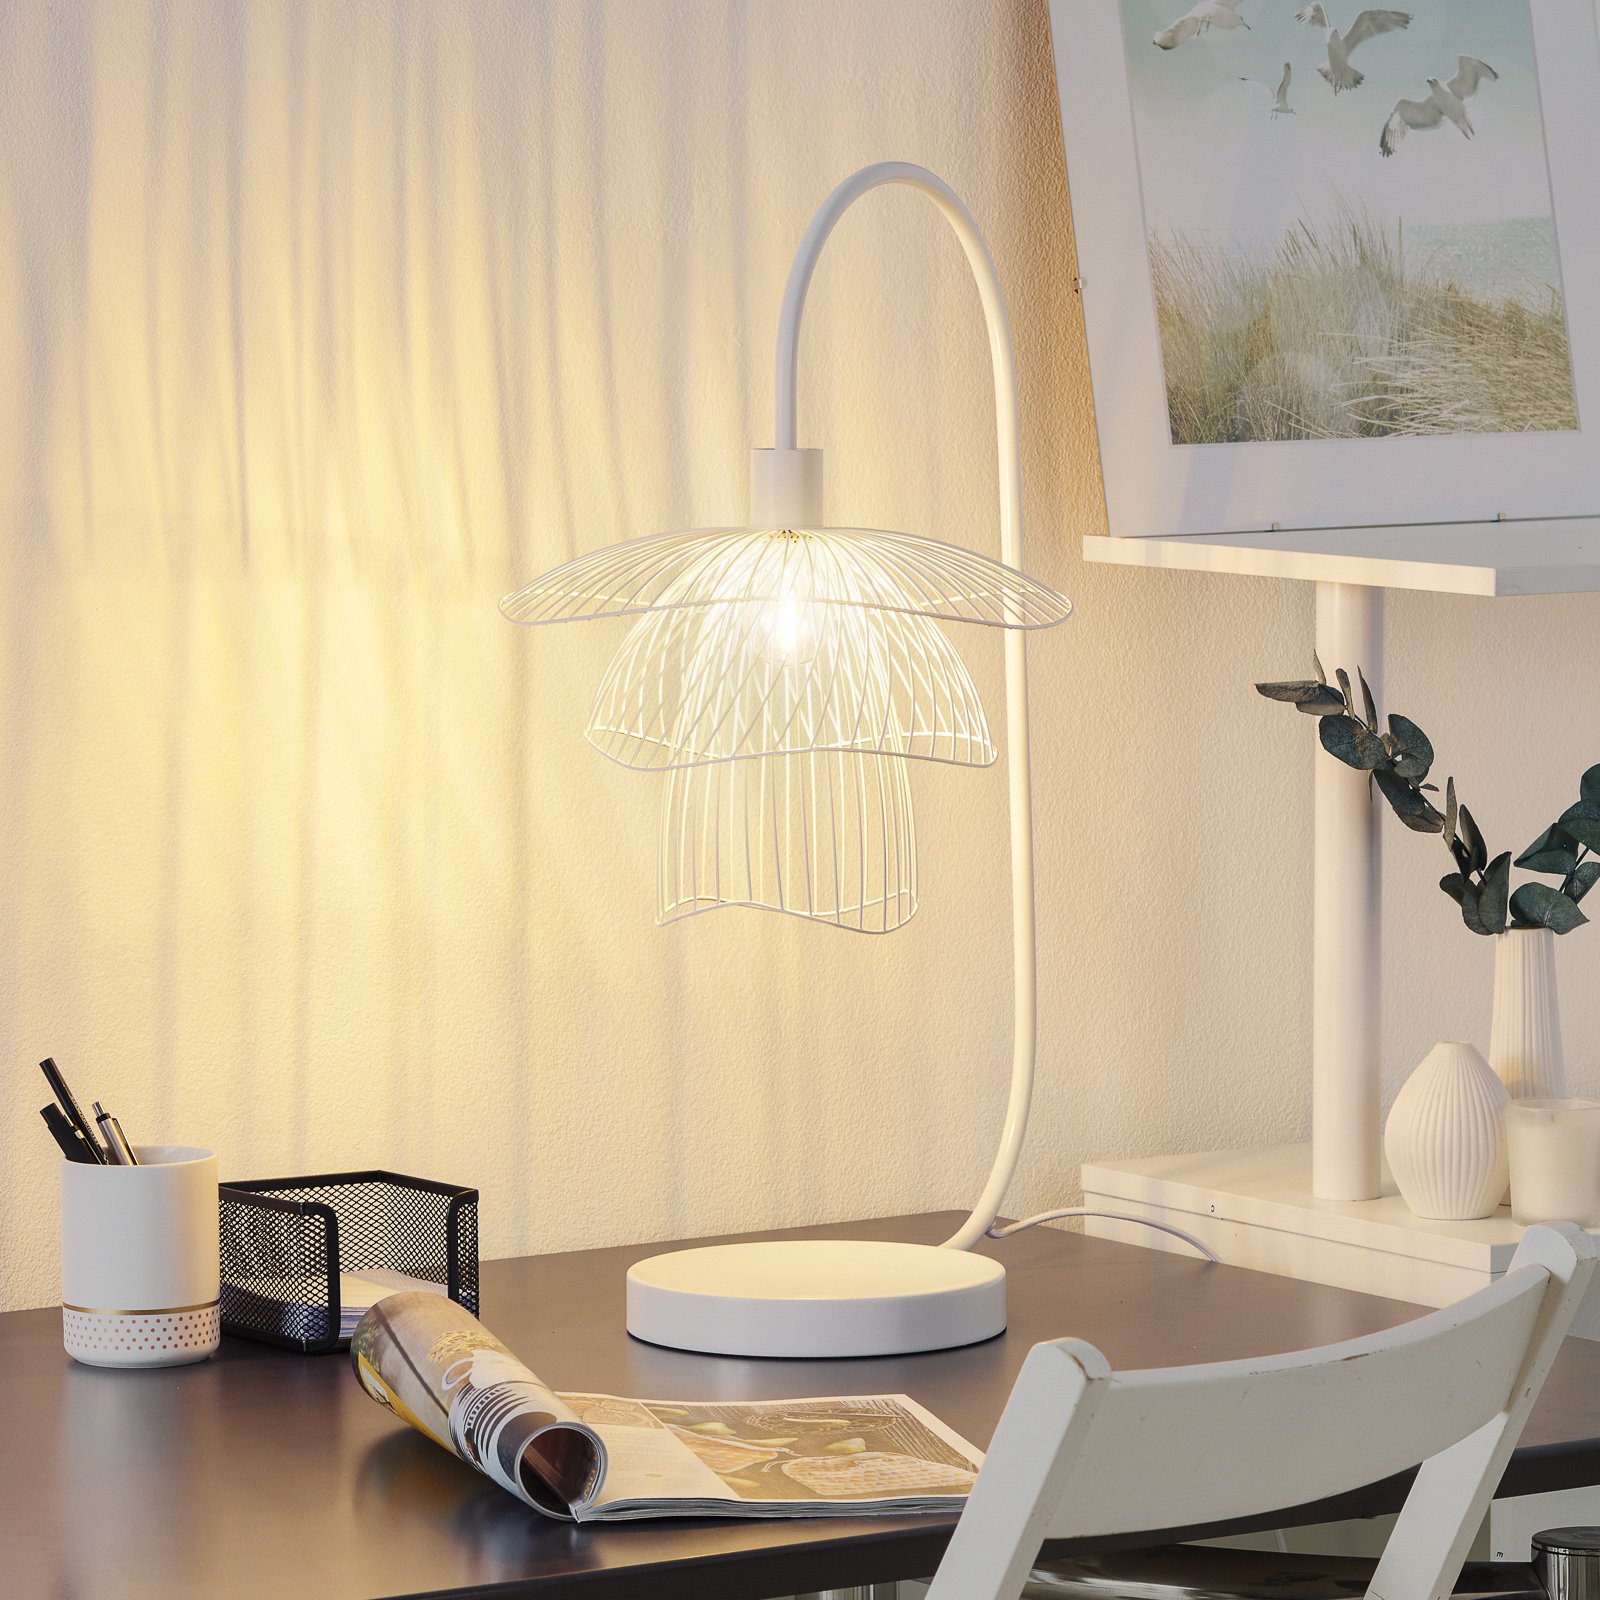 Forestier Papillon XS table lamp, white